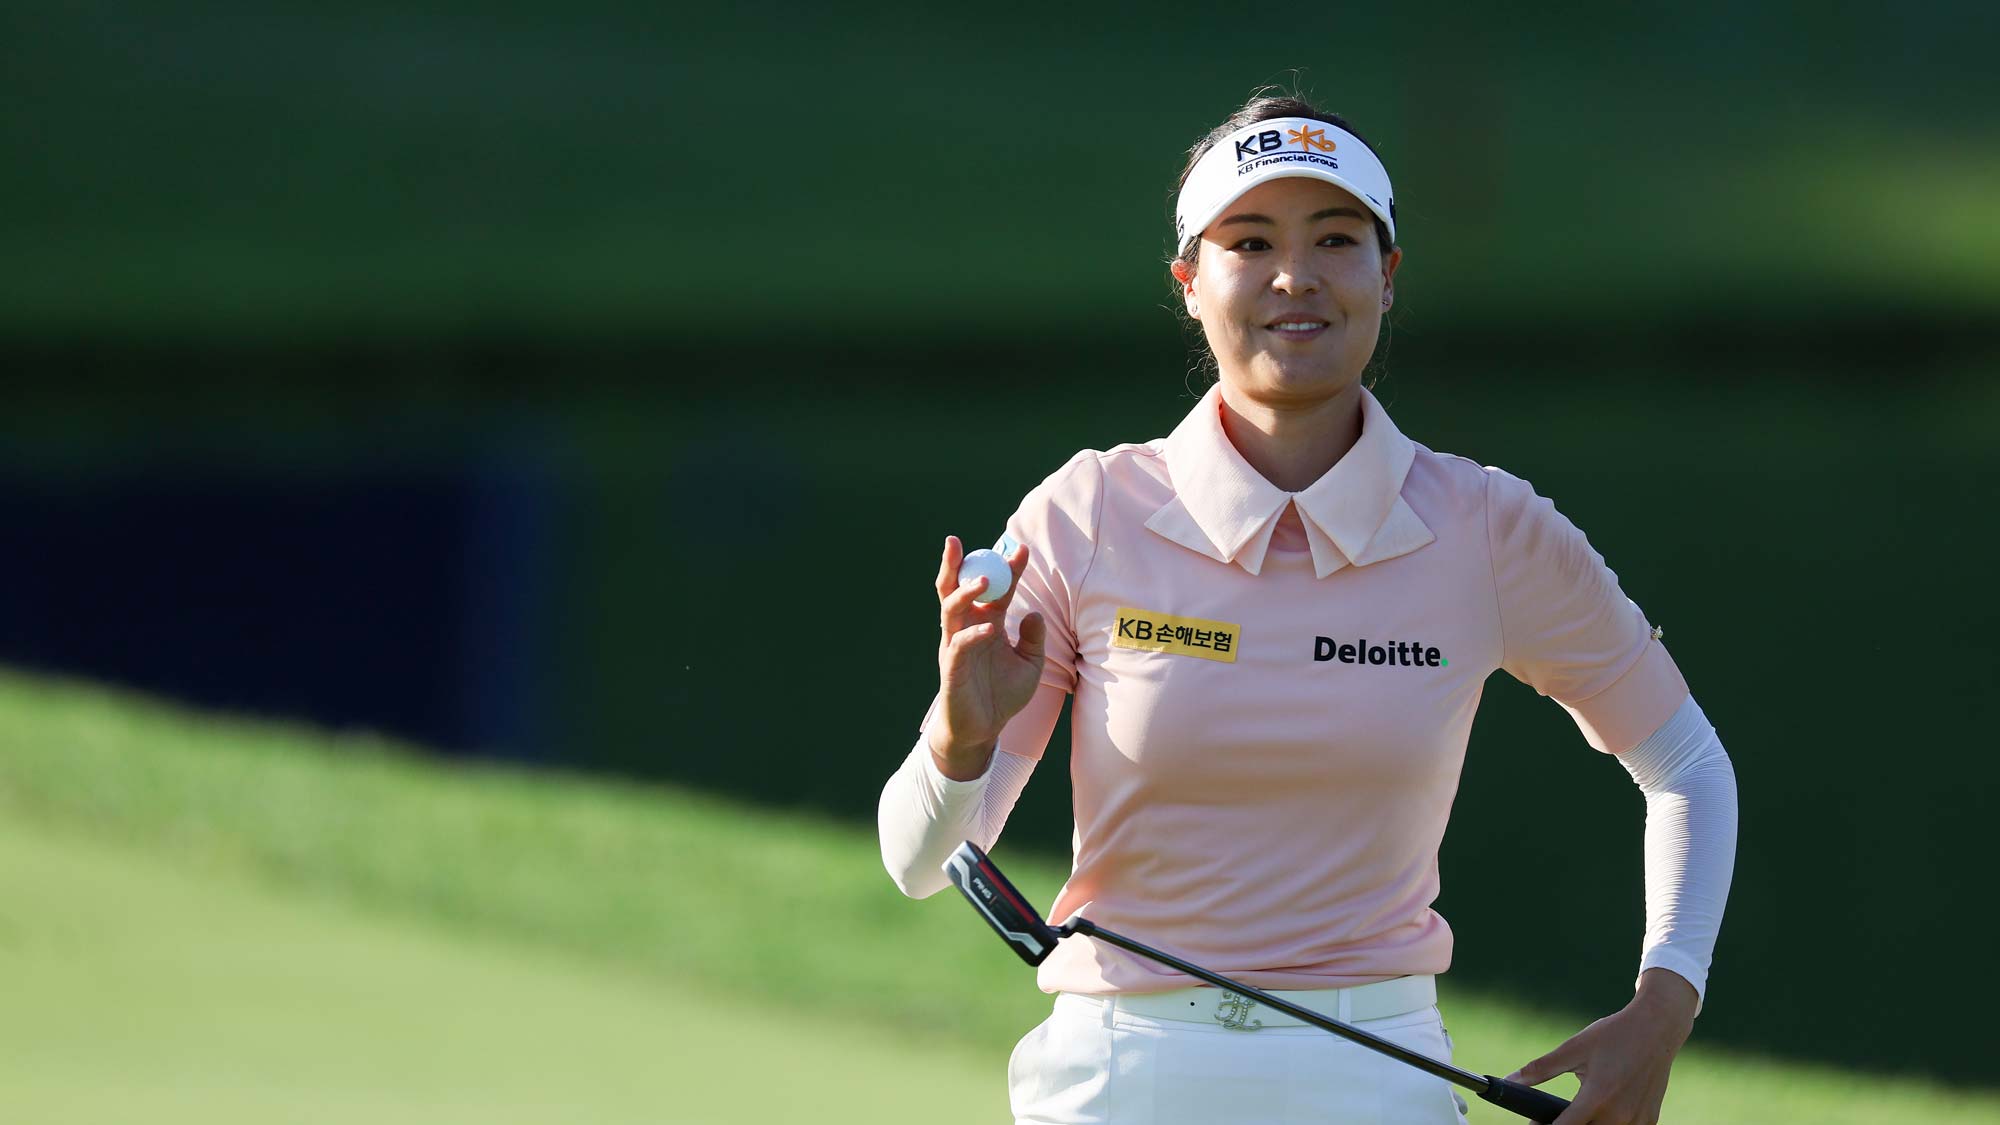 Chun shoots 69 to lead by 6 at Womens PGA Championship LPGA Ladies Professional Golf Association